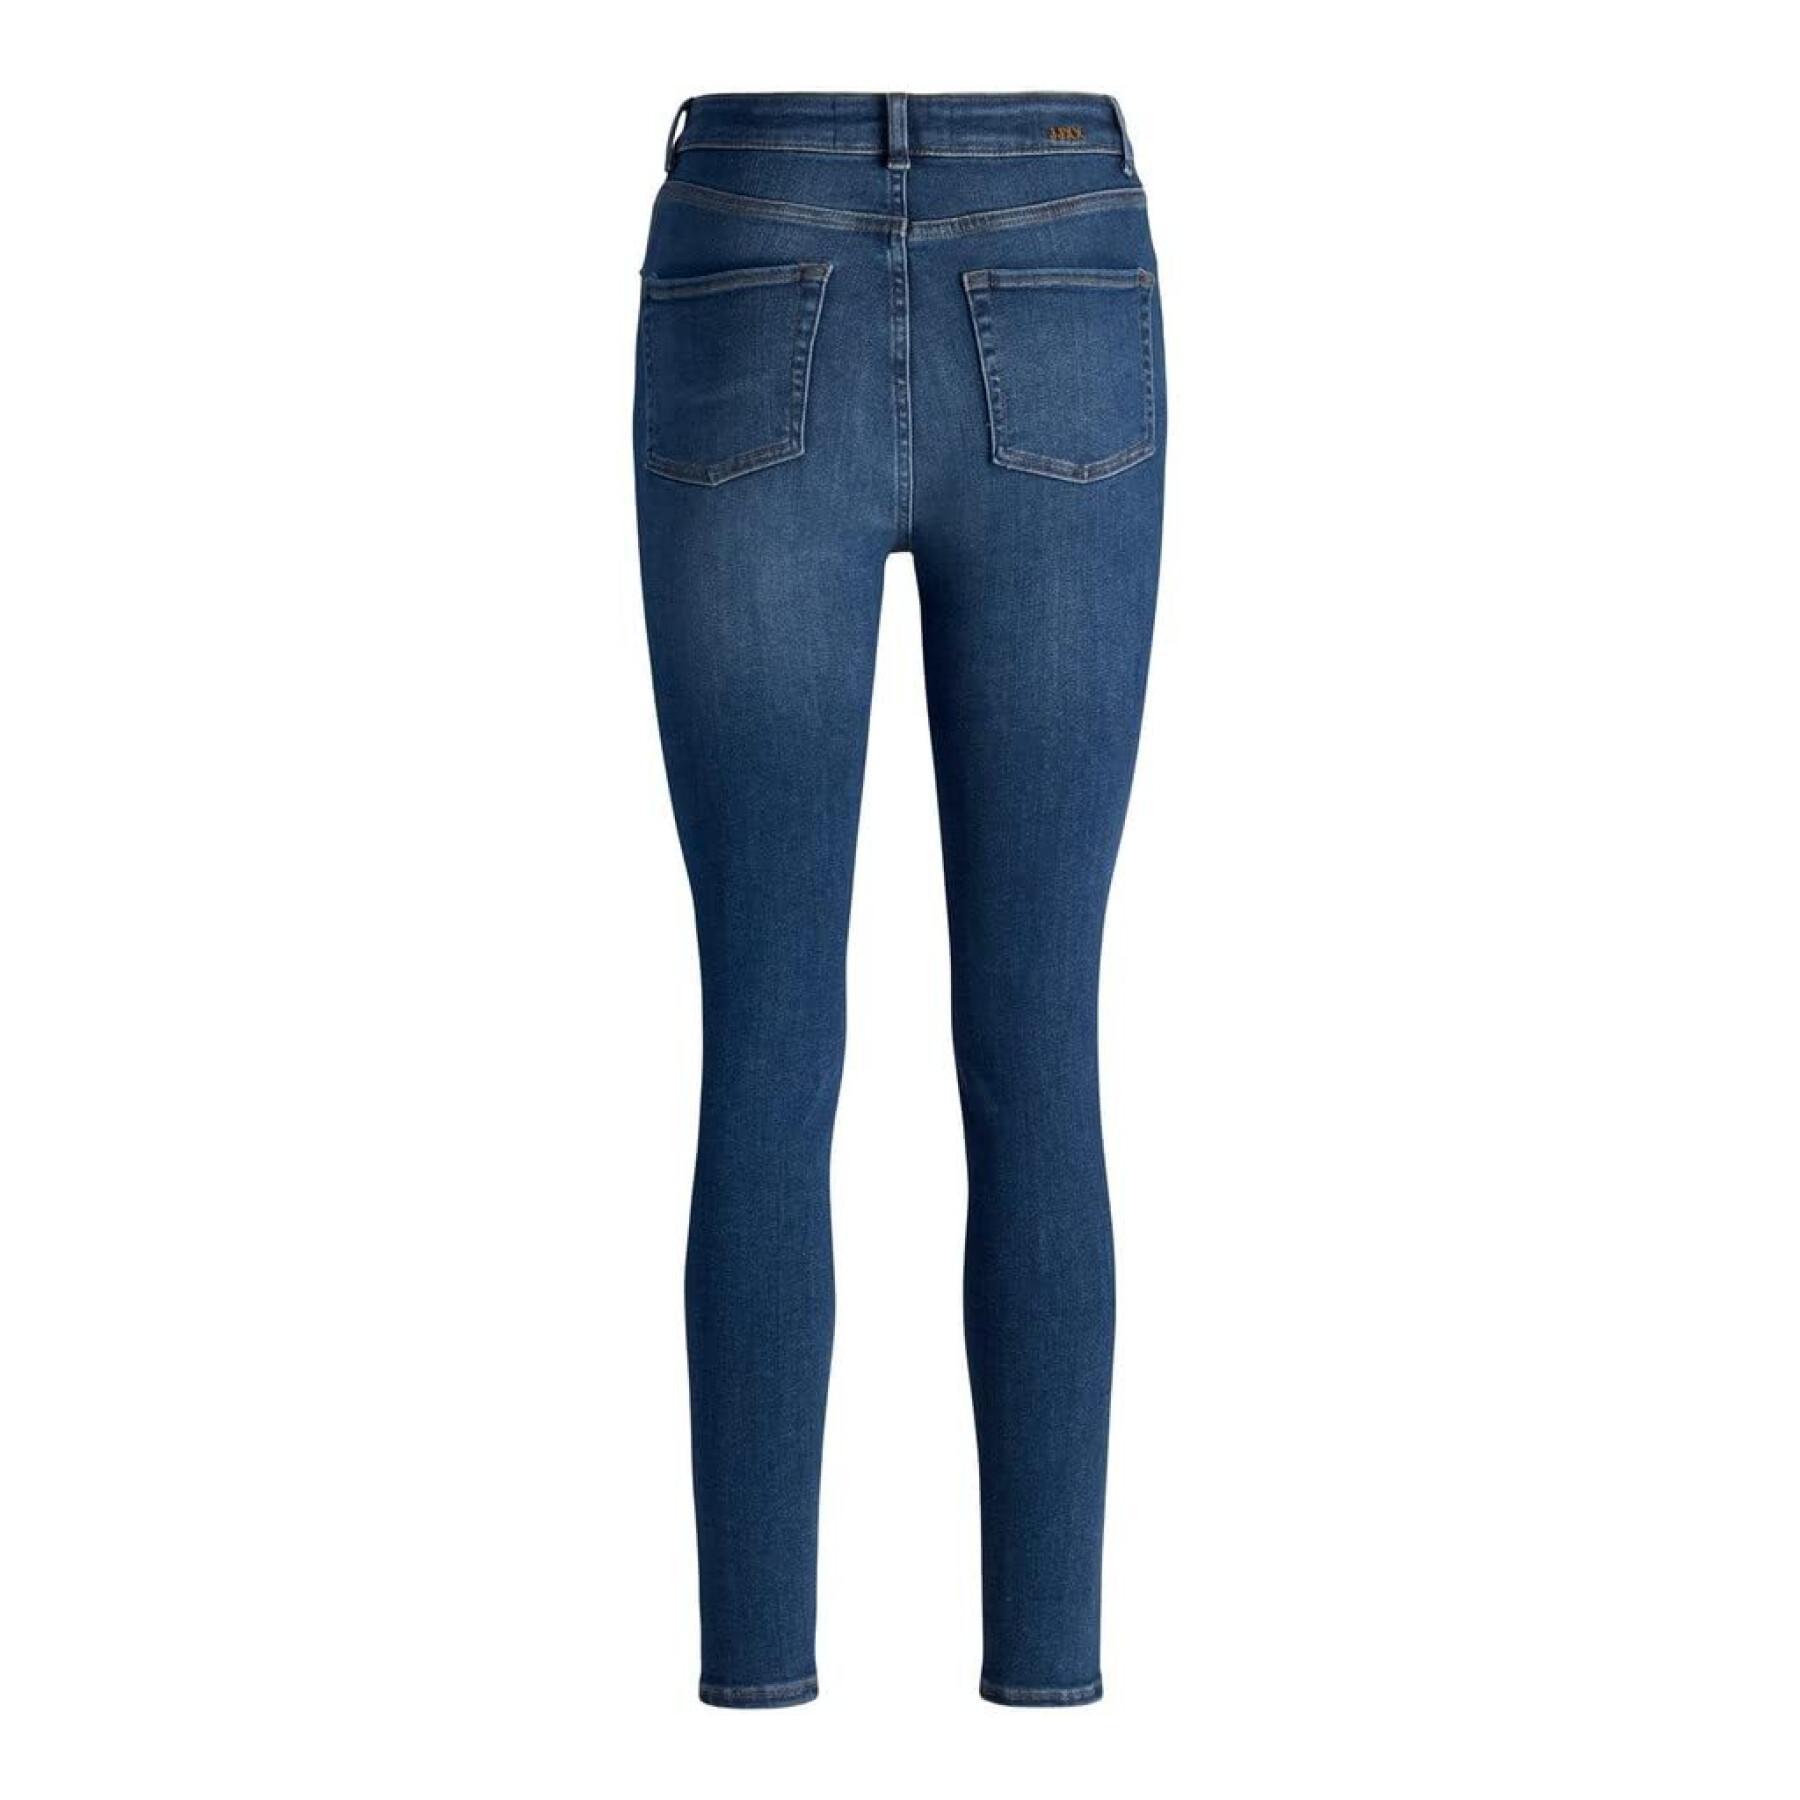 Dames skinny jeans met hoge taille JJXX Vienna